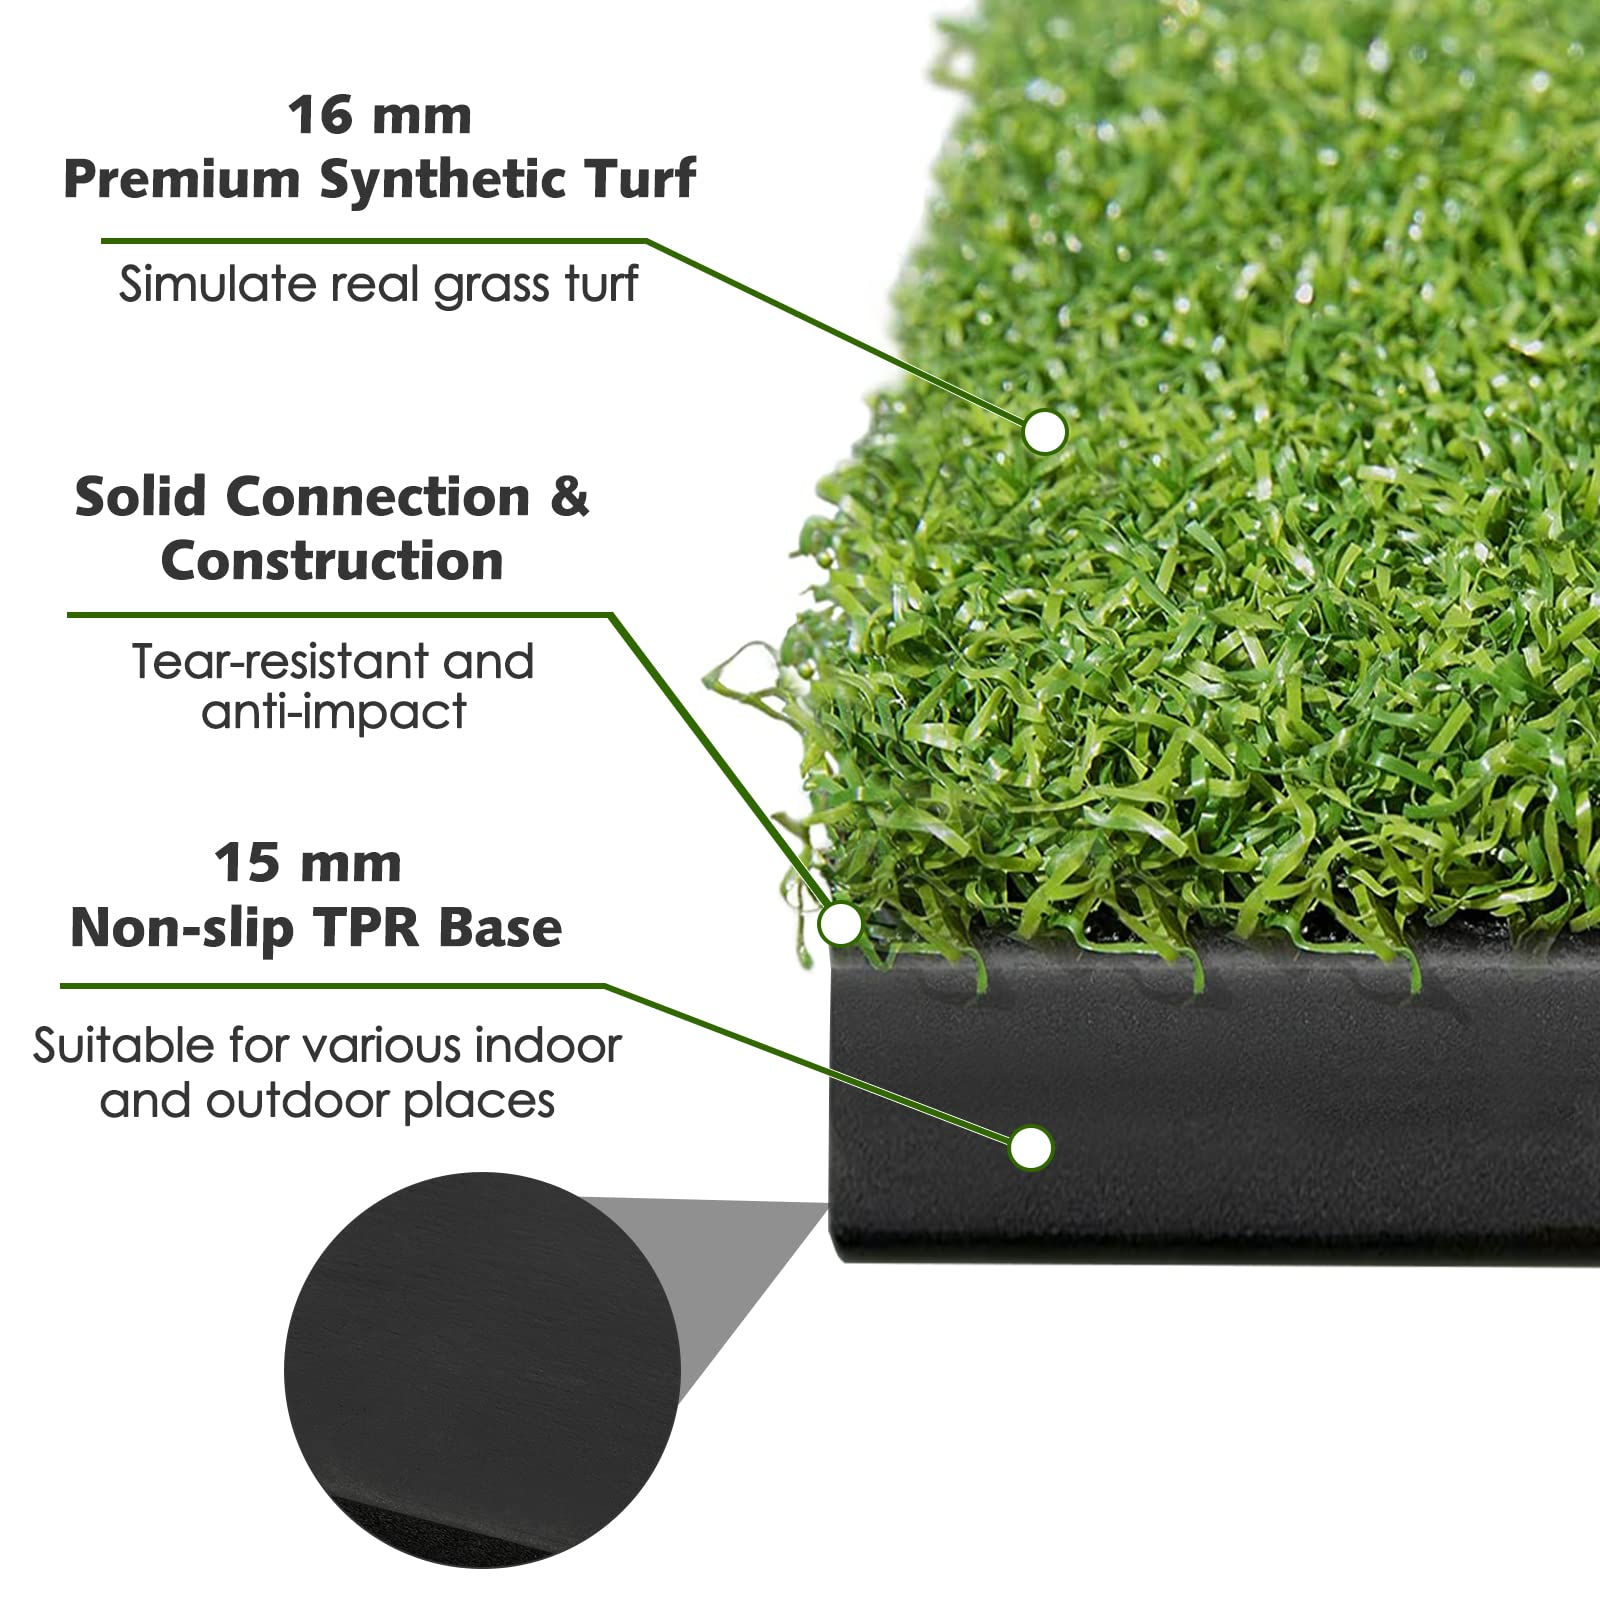 Goplus Golf Mat, 5 ft x 3 ft Golf Hitting Mats Artificial Turf with 3 Rubber Tees, Golf Practice Mat for Driving